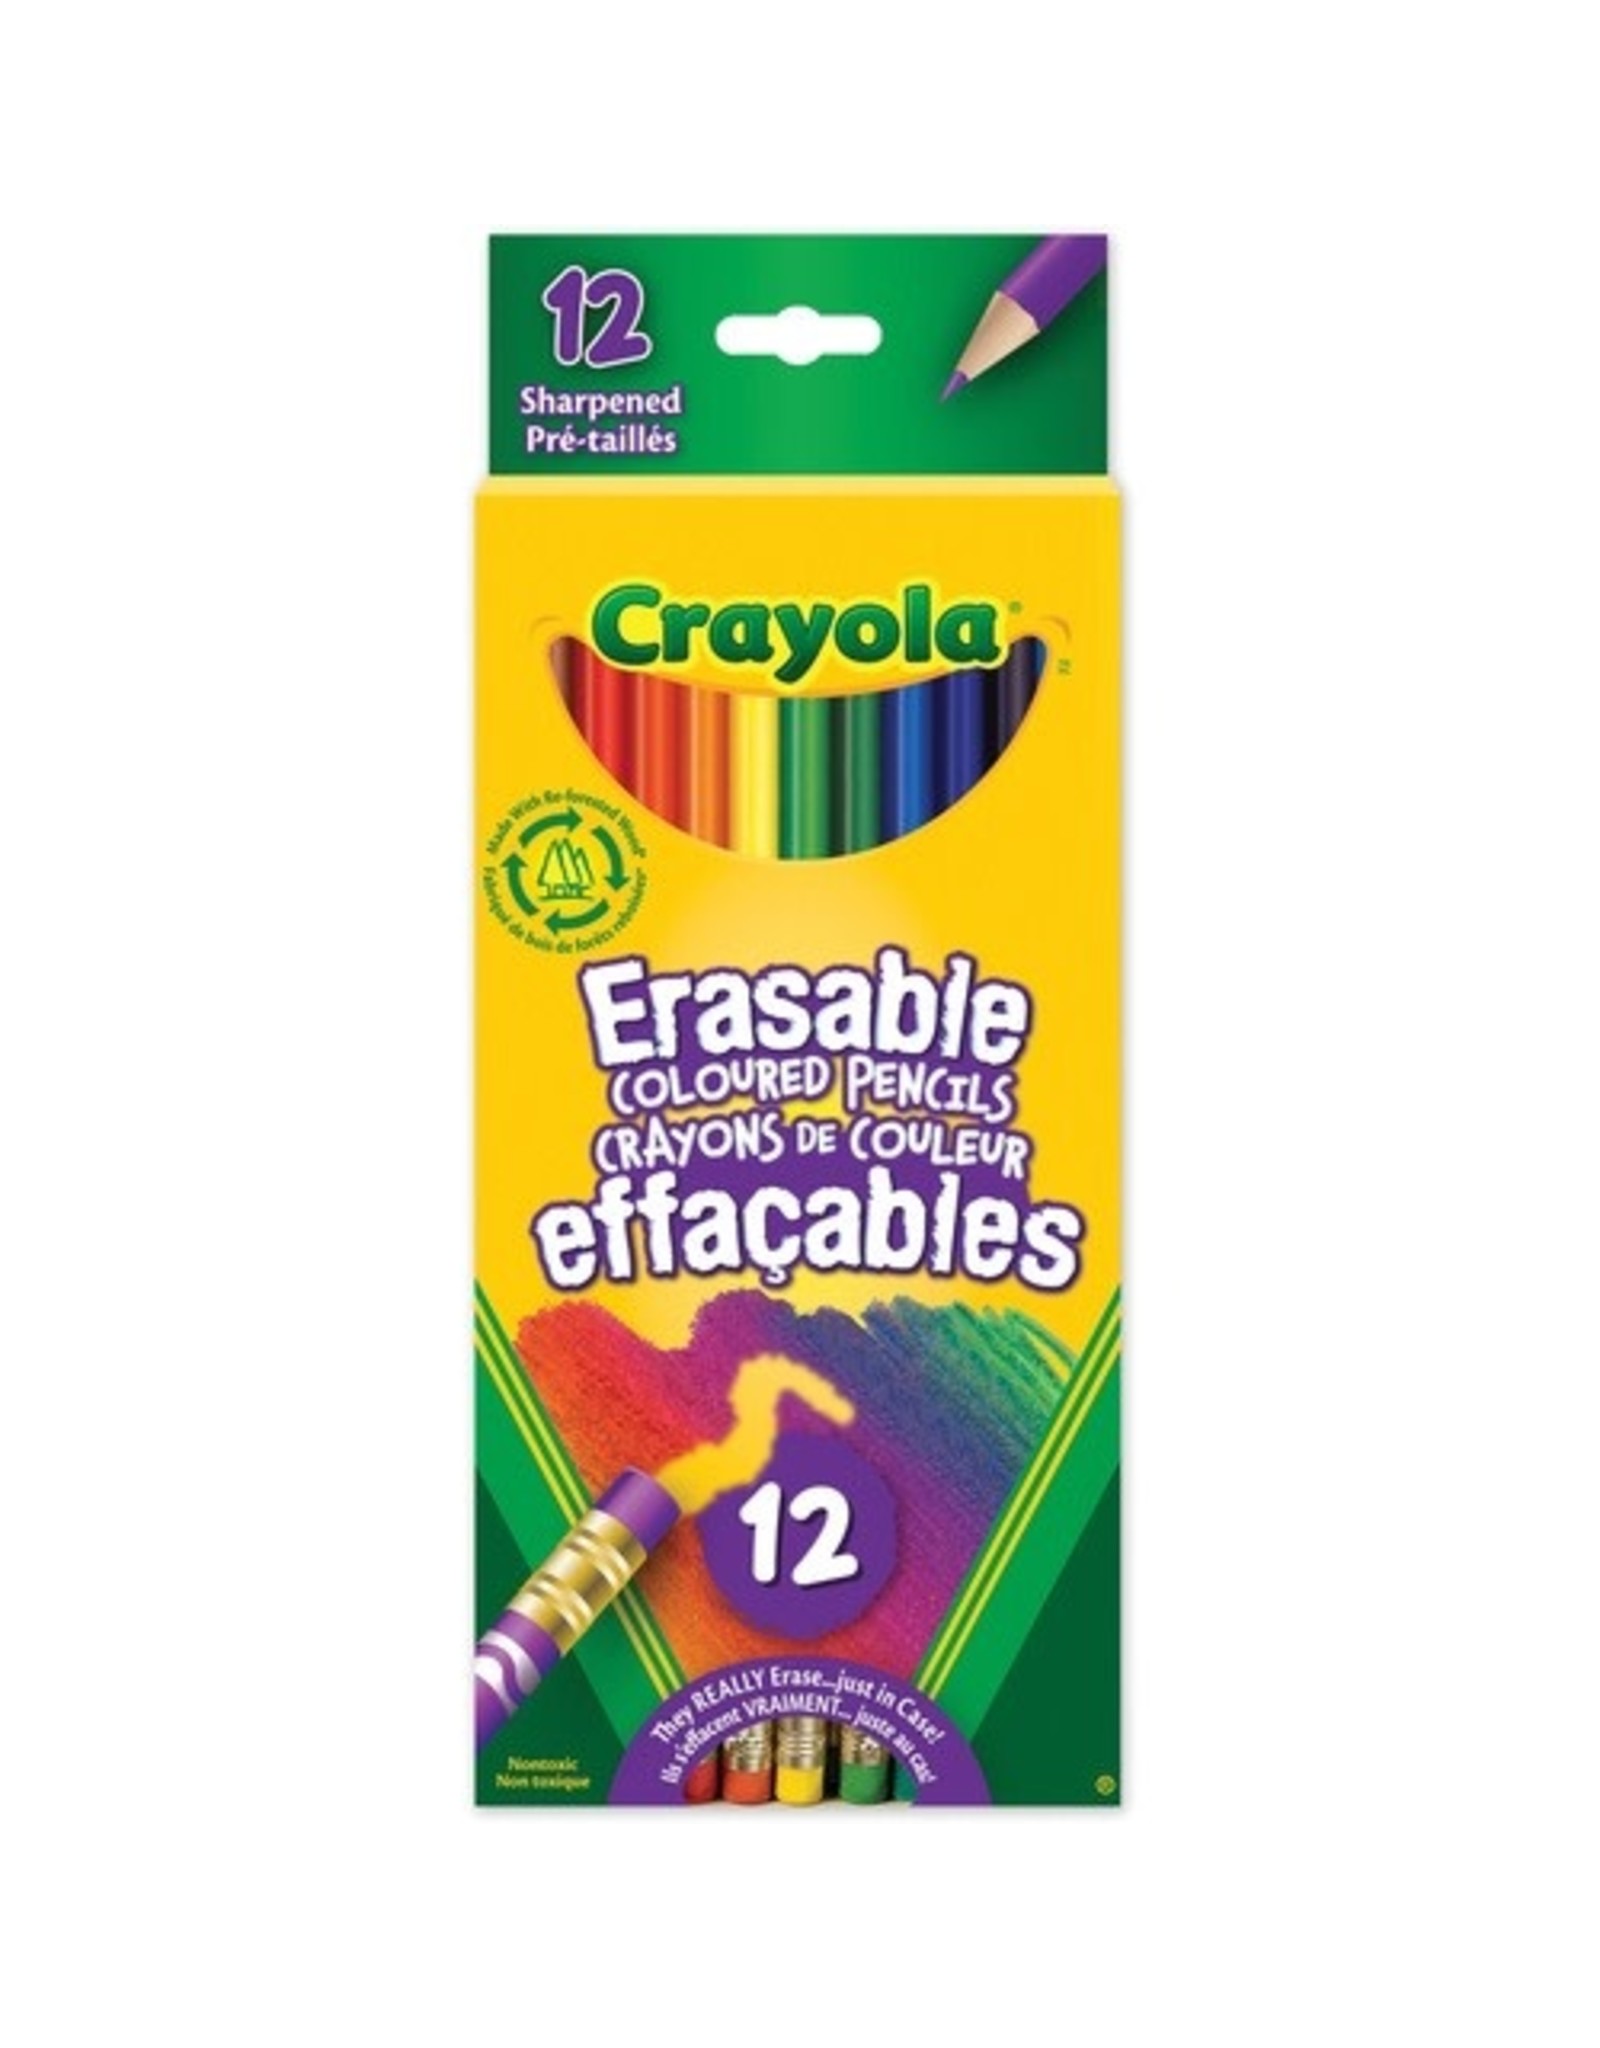 Crayola Erasable Coloured Pencils 12 Pack